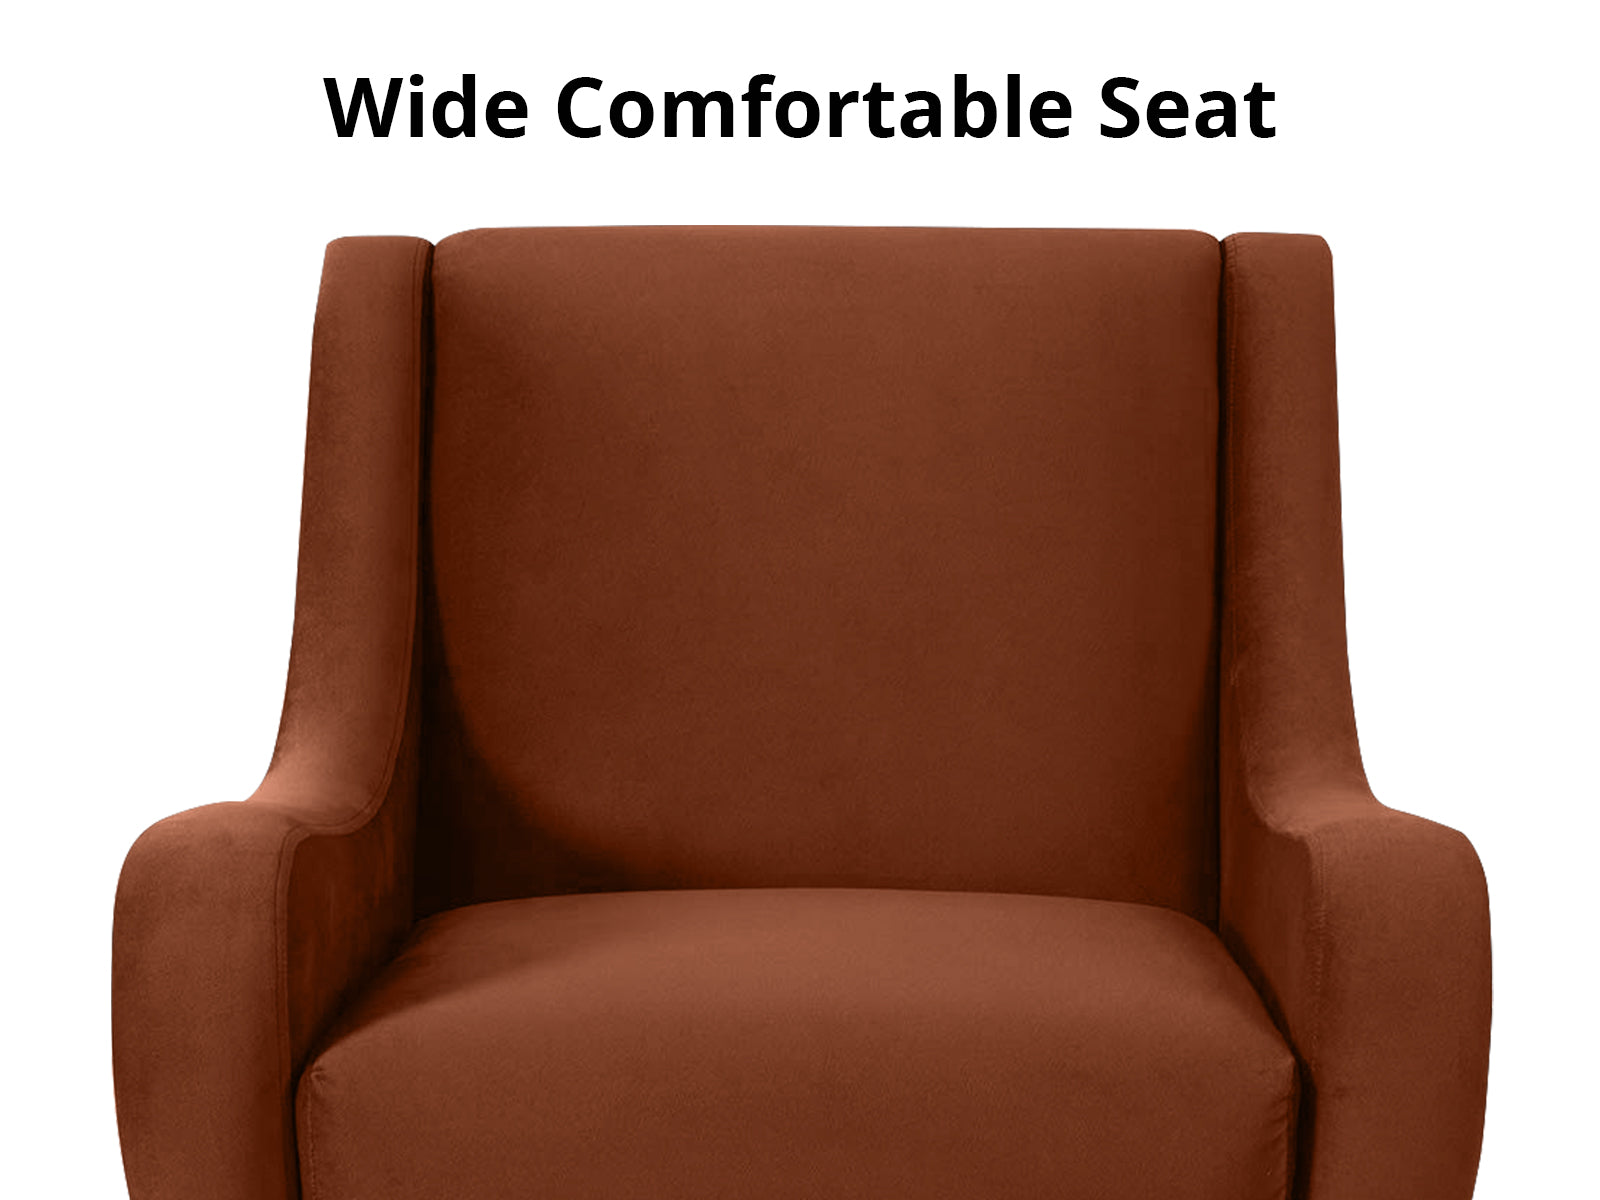 Leisure Chair S49 Velvet Brown Red